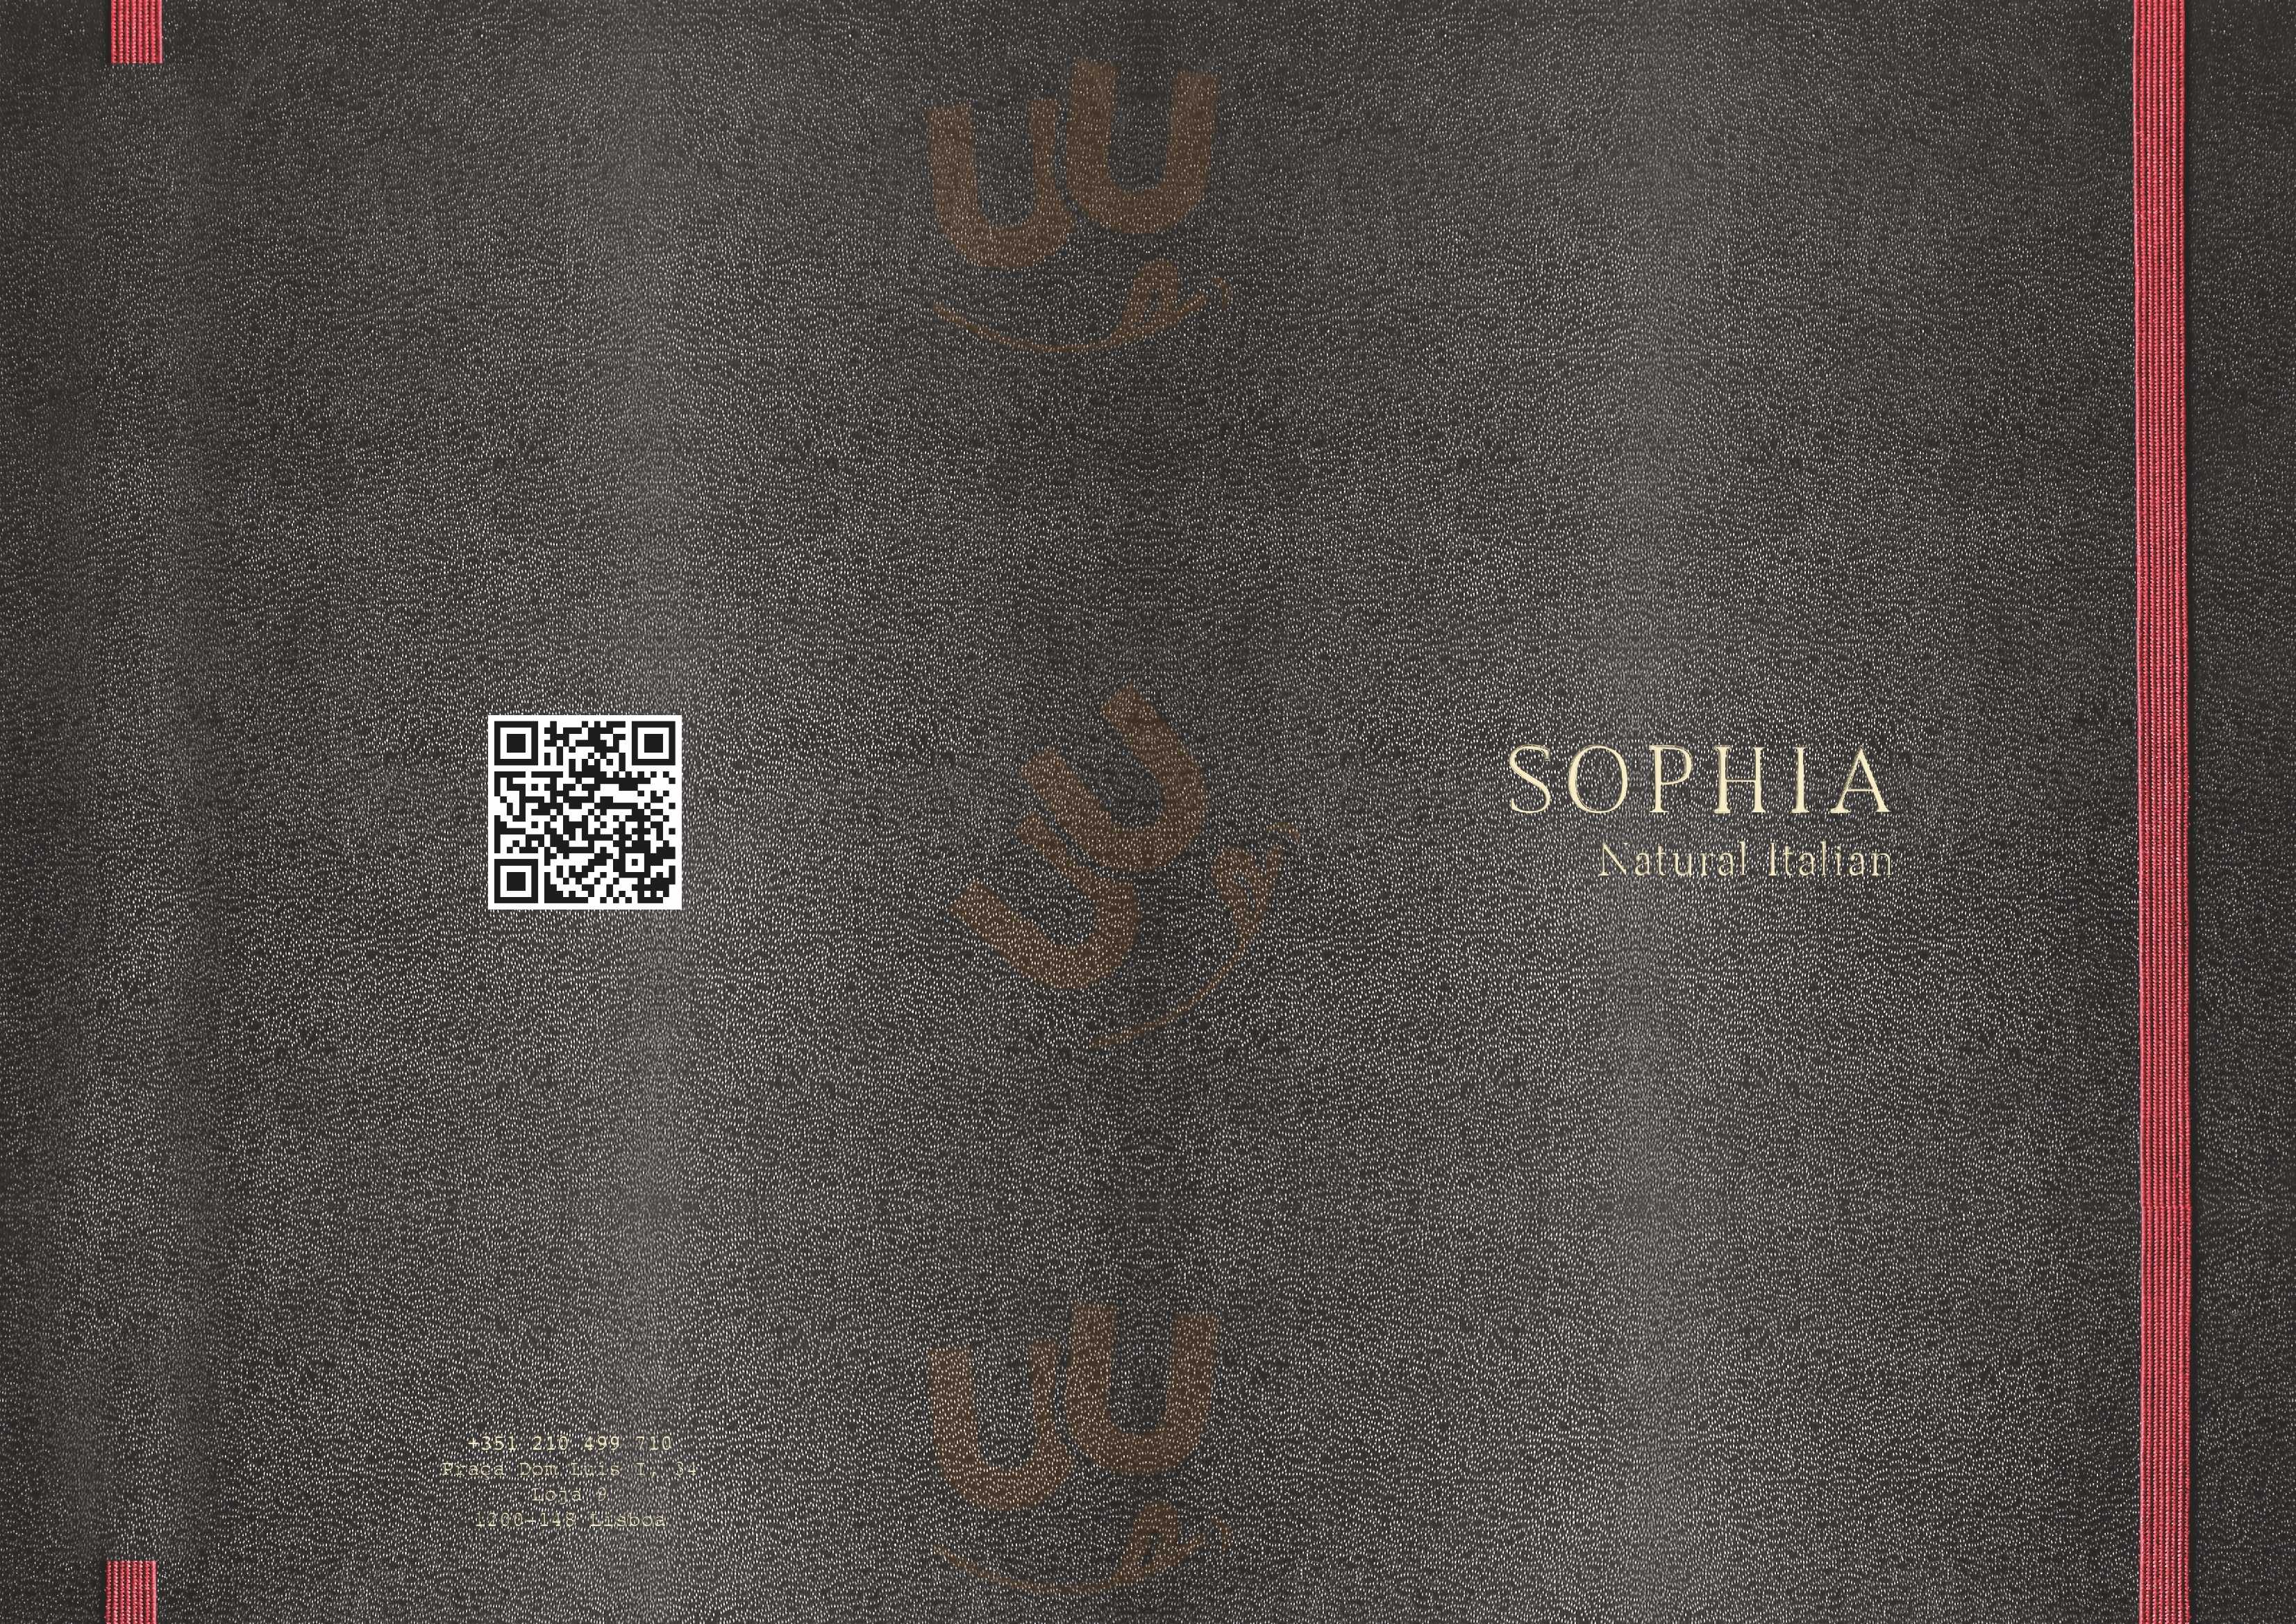 Sophia - Natural Italian Lisboa Menu - 1